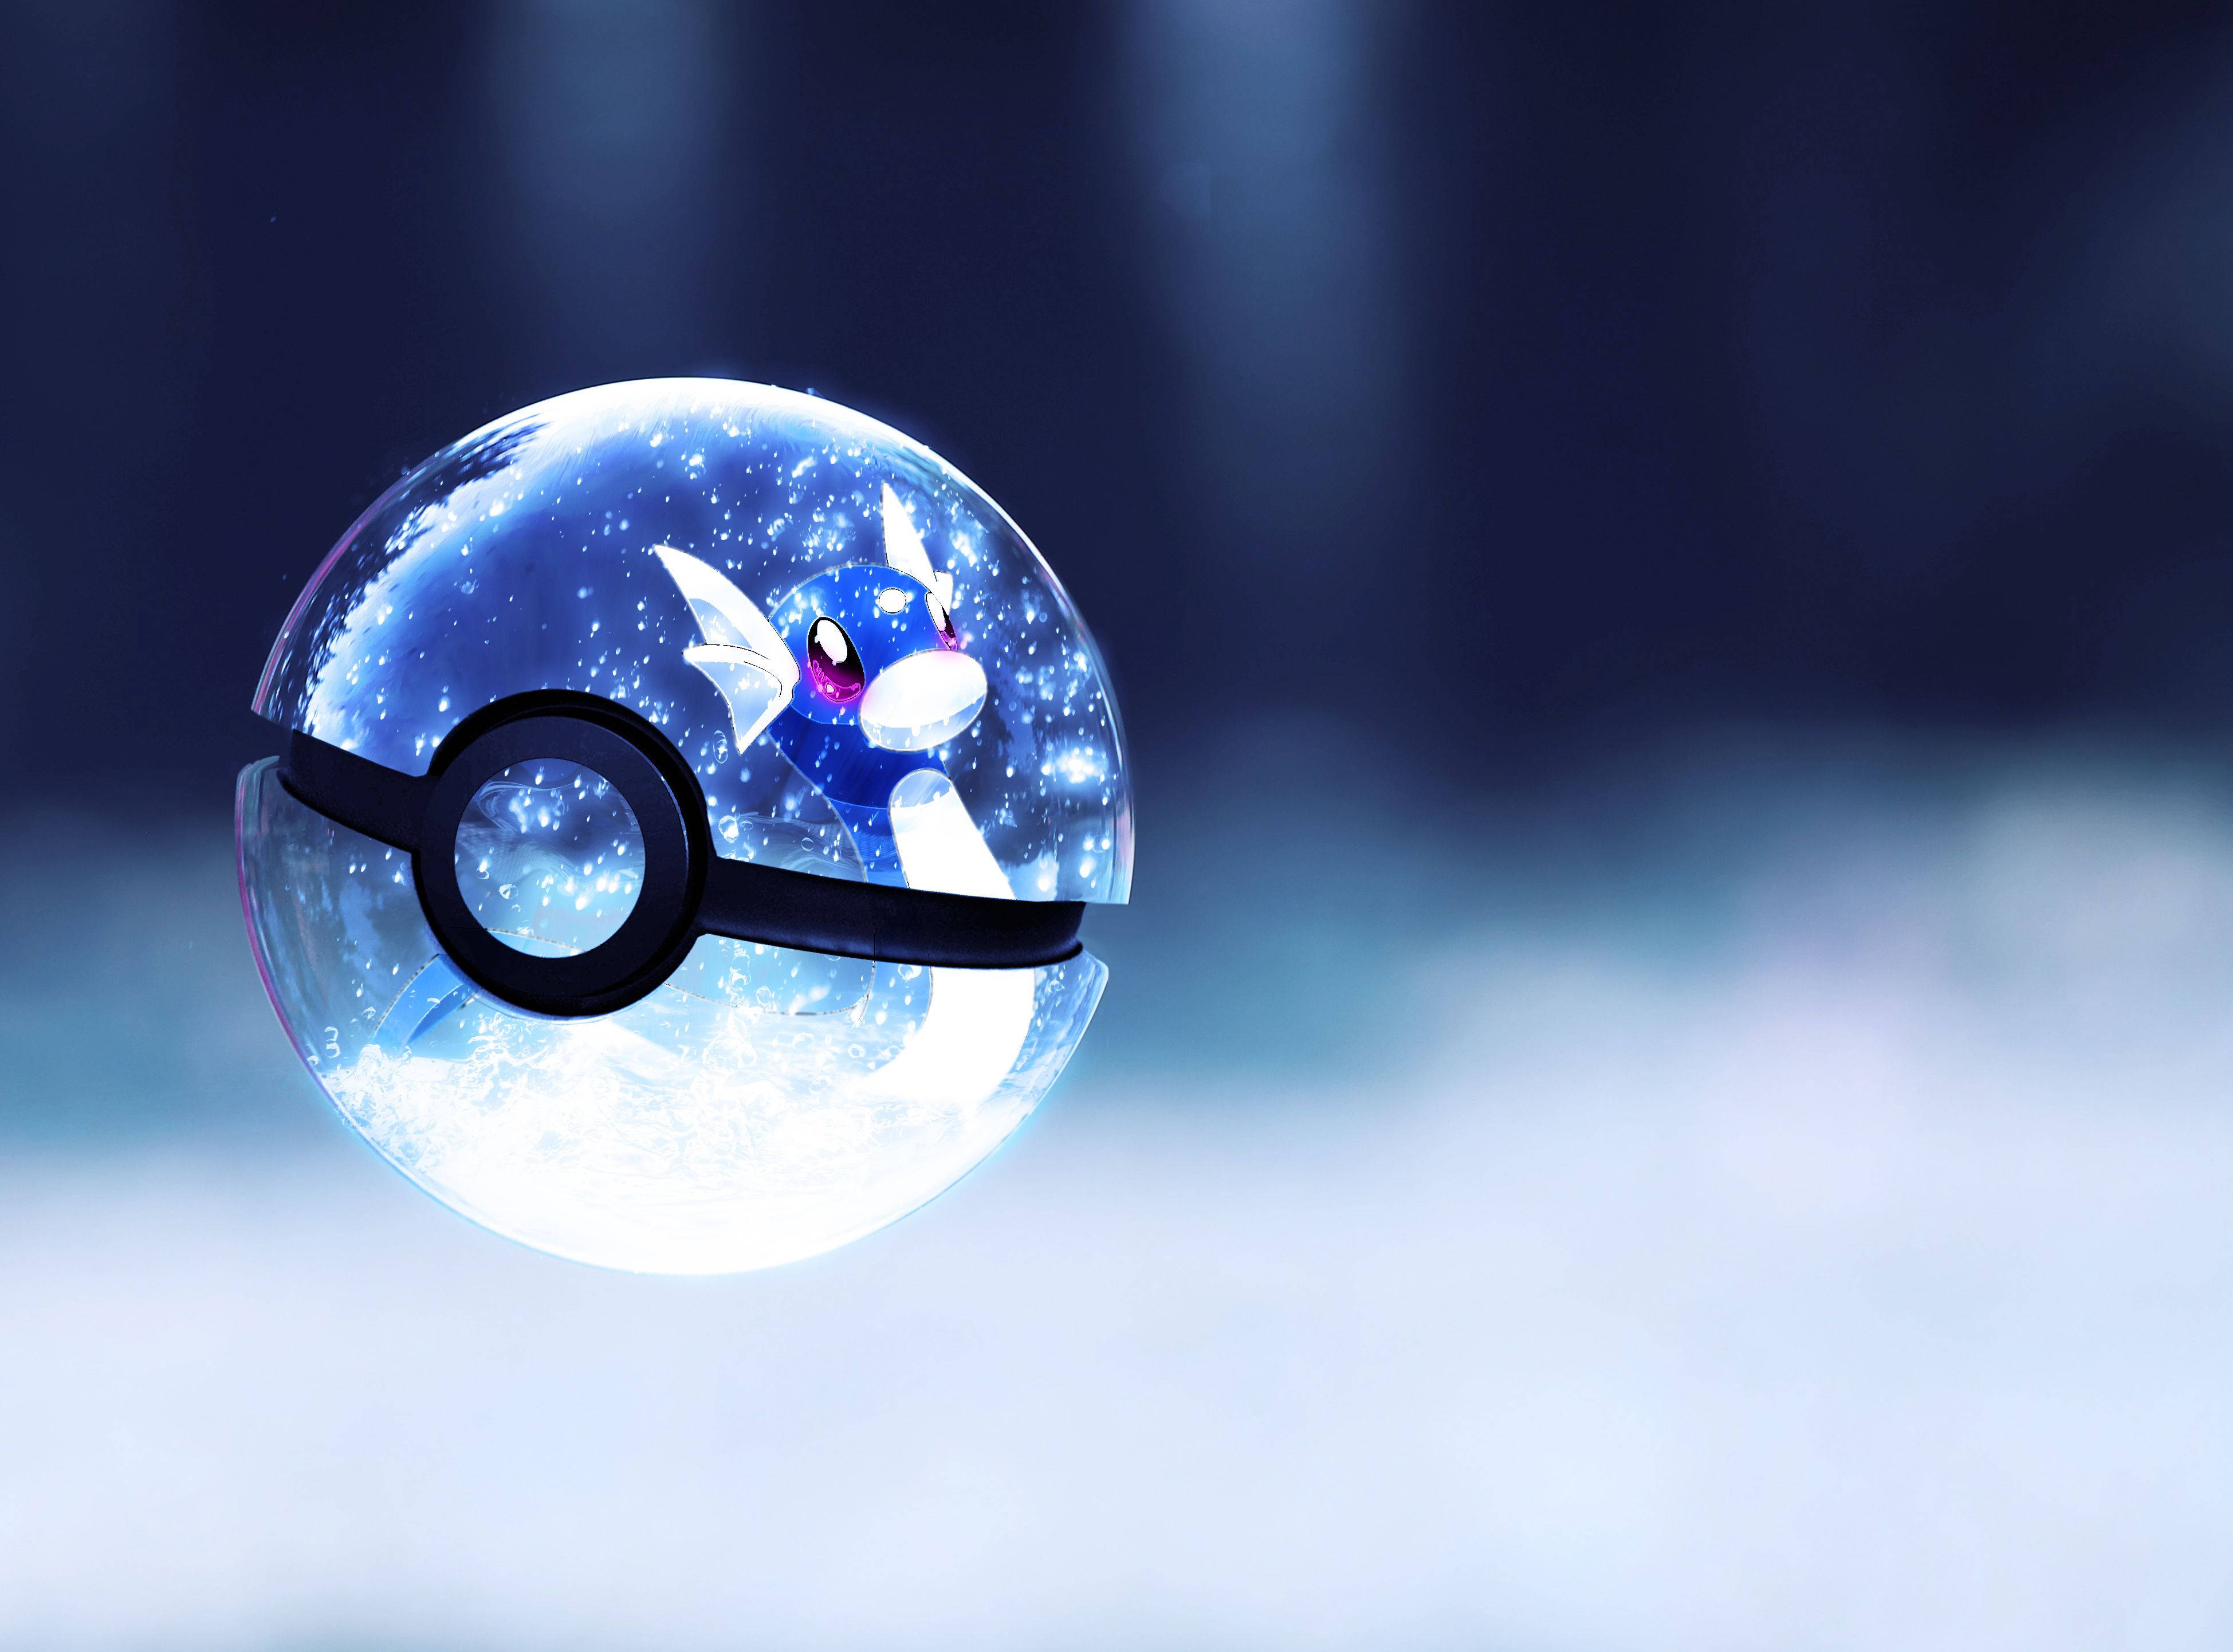 Trending Blue Pokeball With Dratini Pokemon Background